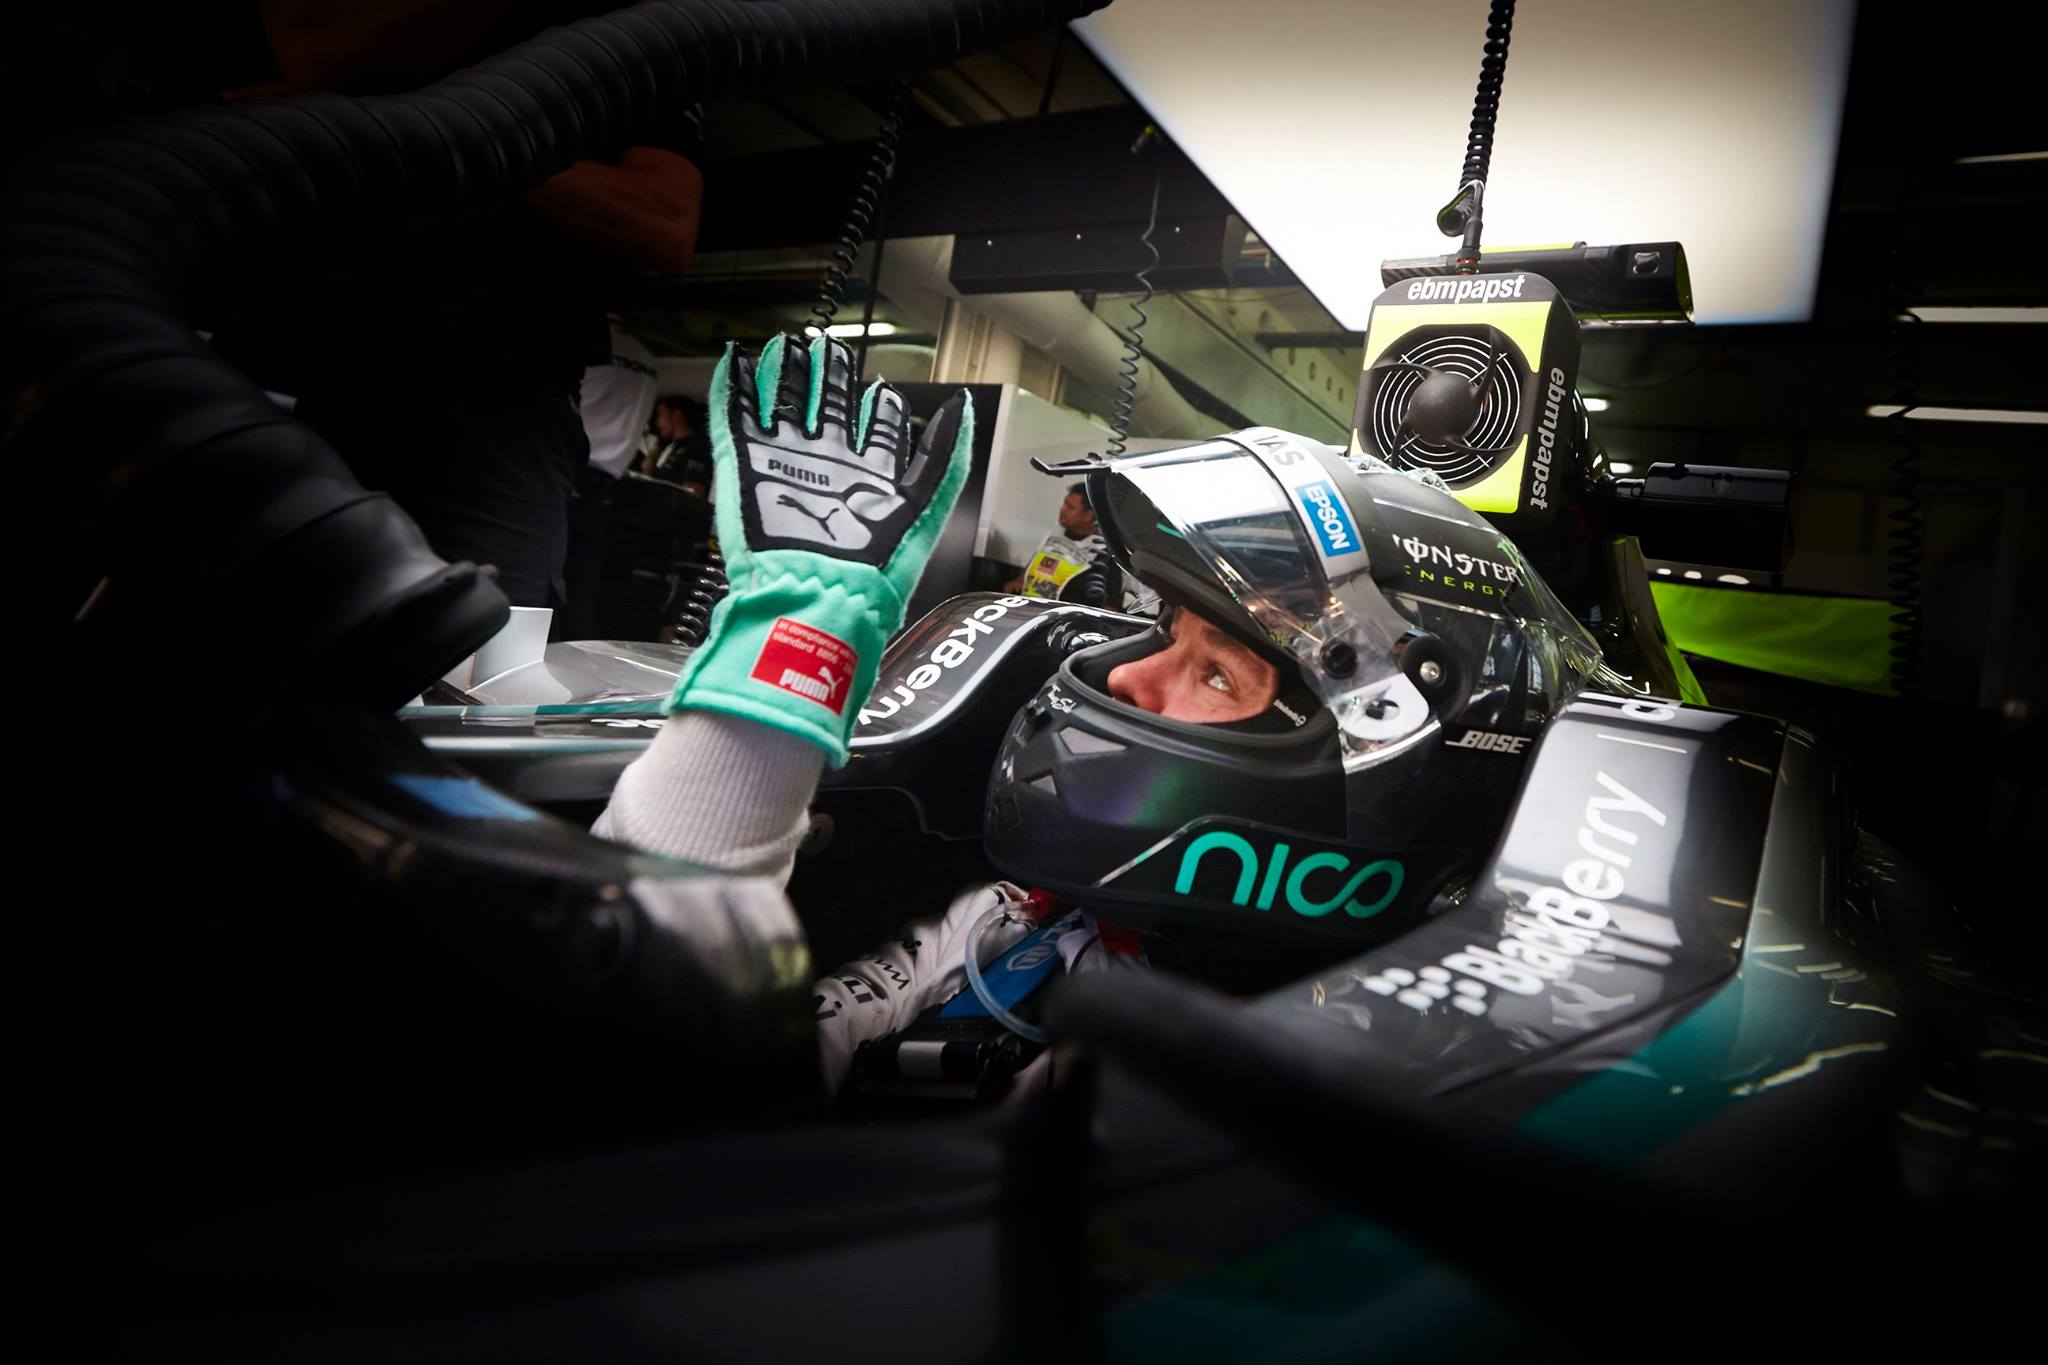 Mercedes driver Nico Rosberg at the F1 Malaysian Grand Prix - Image credit: Mercedes AMG F1